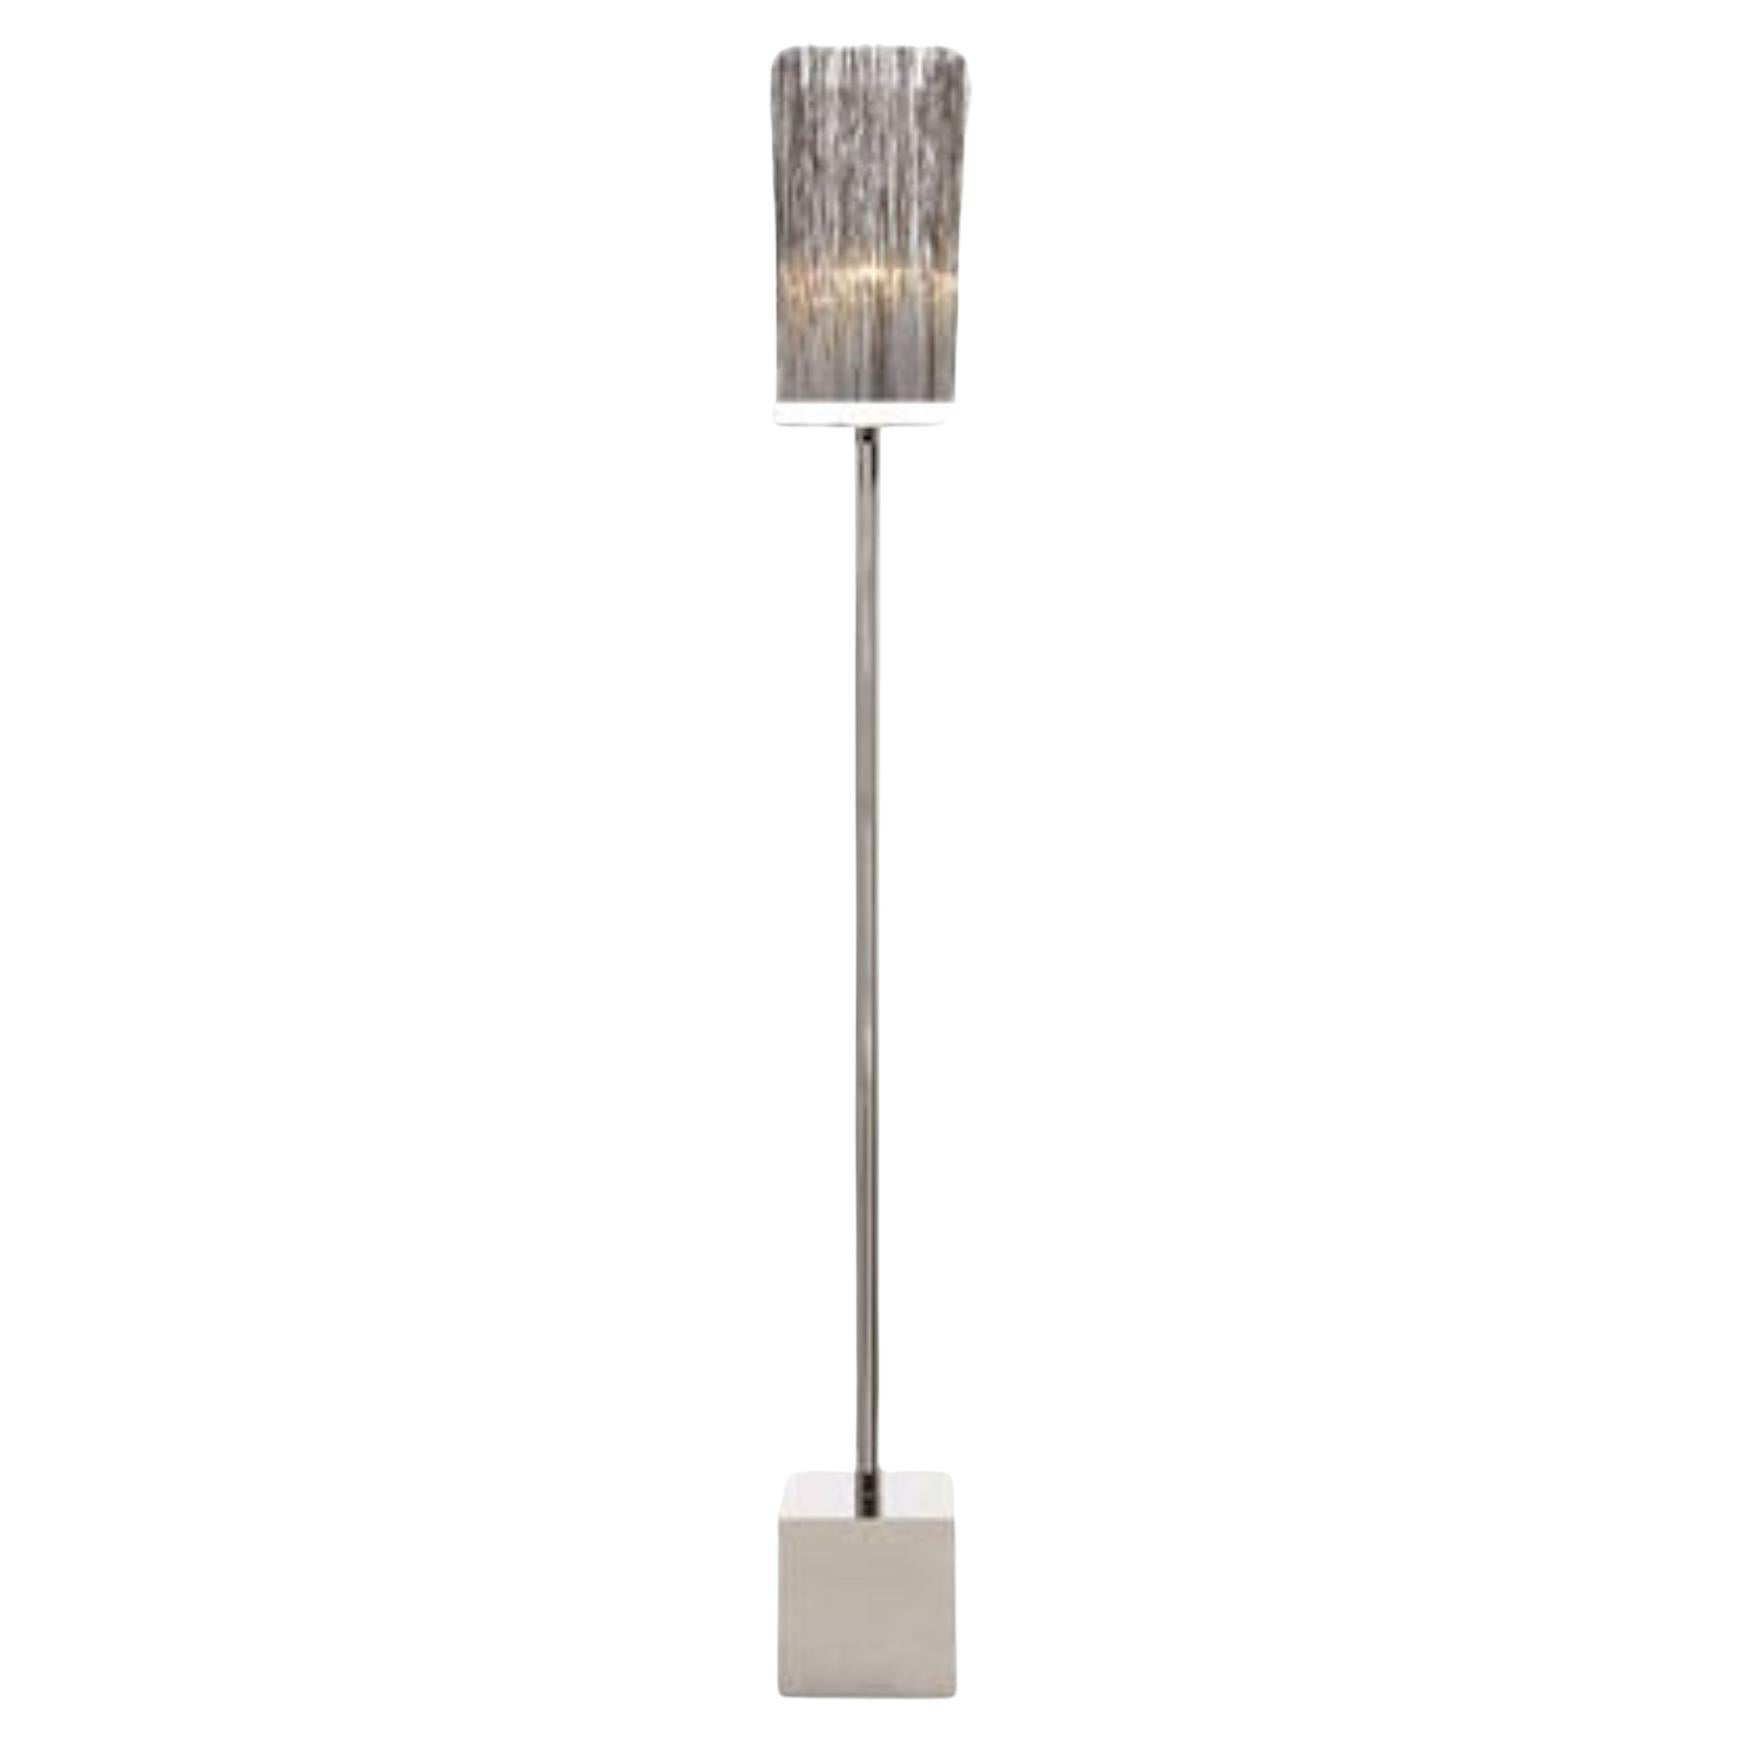 Grand lampadaire contemporain Modernity Brand van Egmond en vente